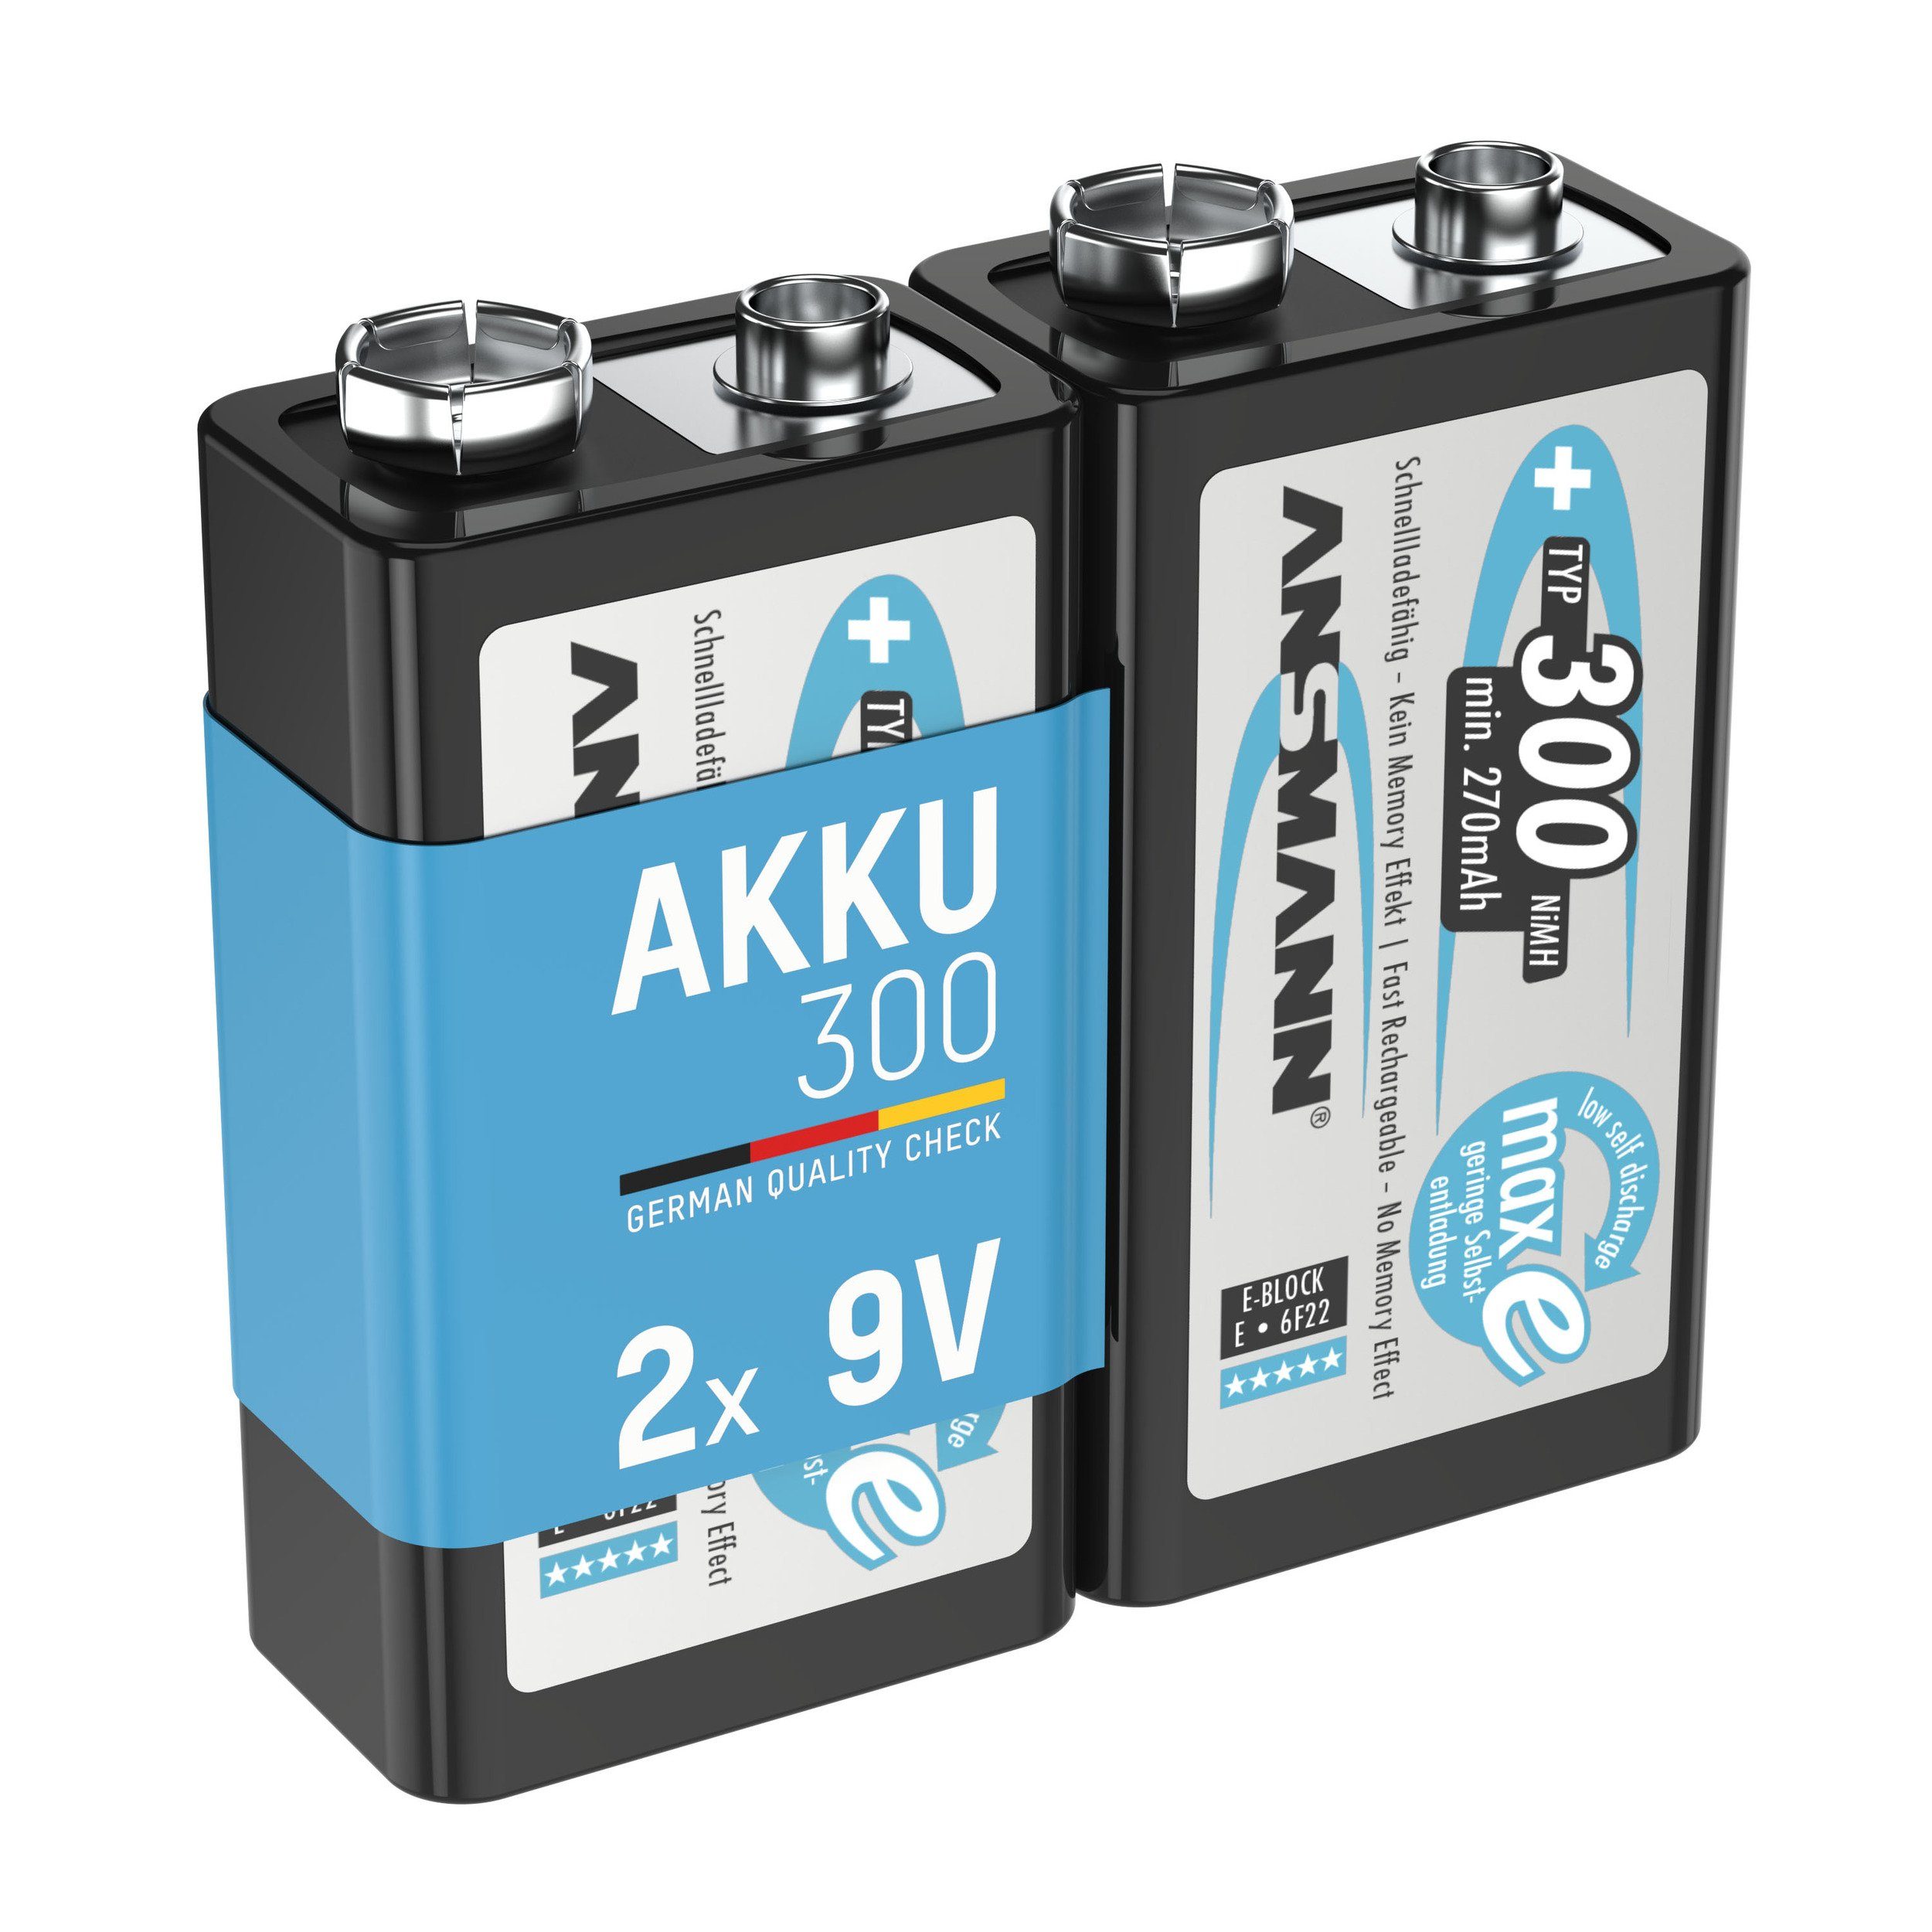 ANSMANN AG Akku 9V 300mAh E-Block NiMH – 1000x wiederaufladbar (2 Stück) Akku 300 mAh (8.4 V)